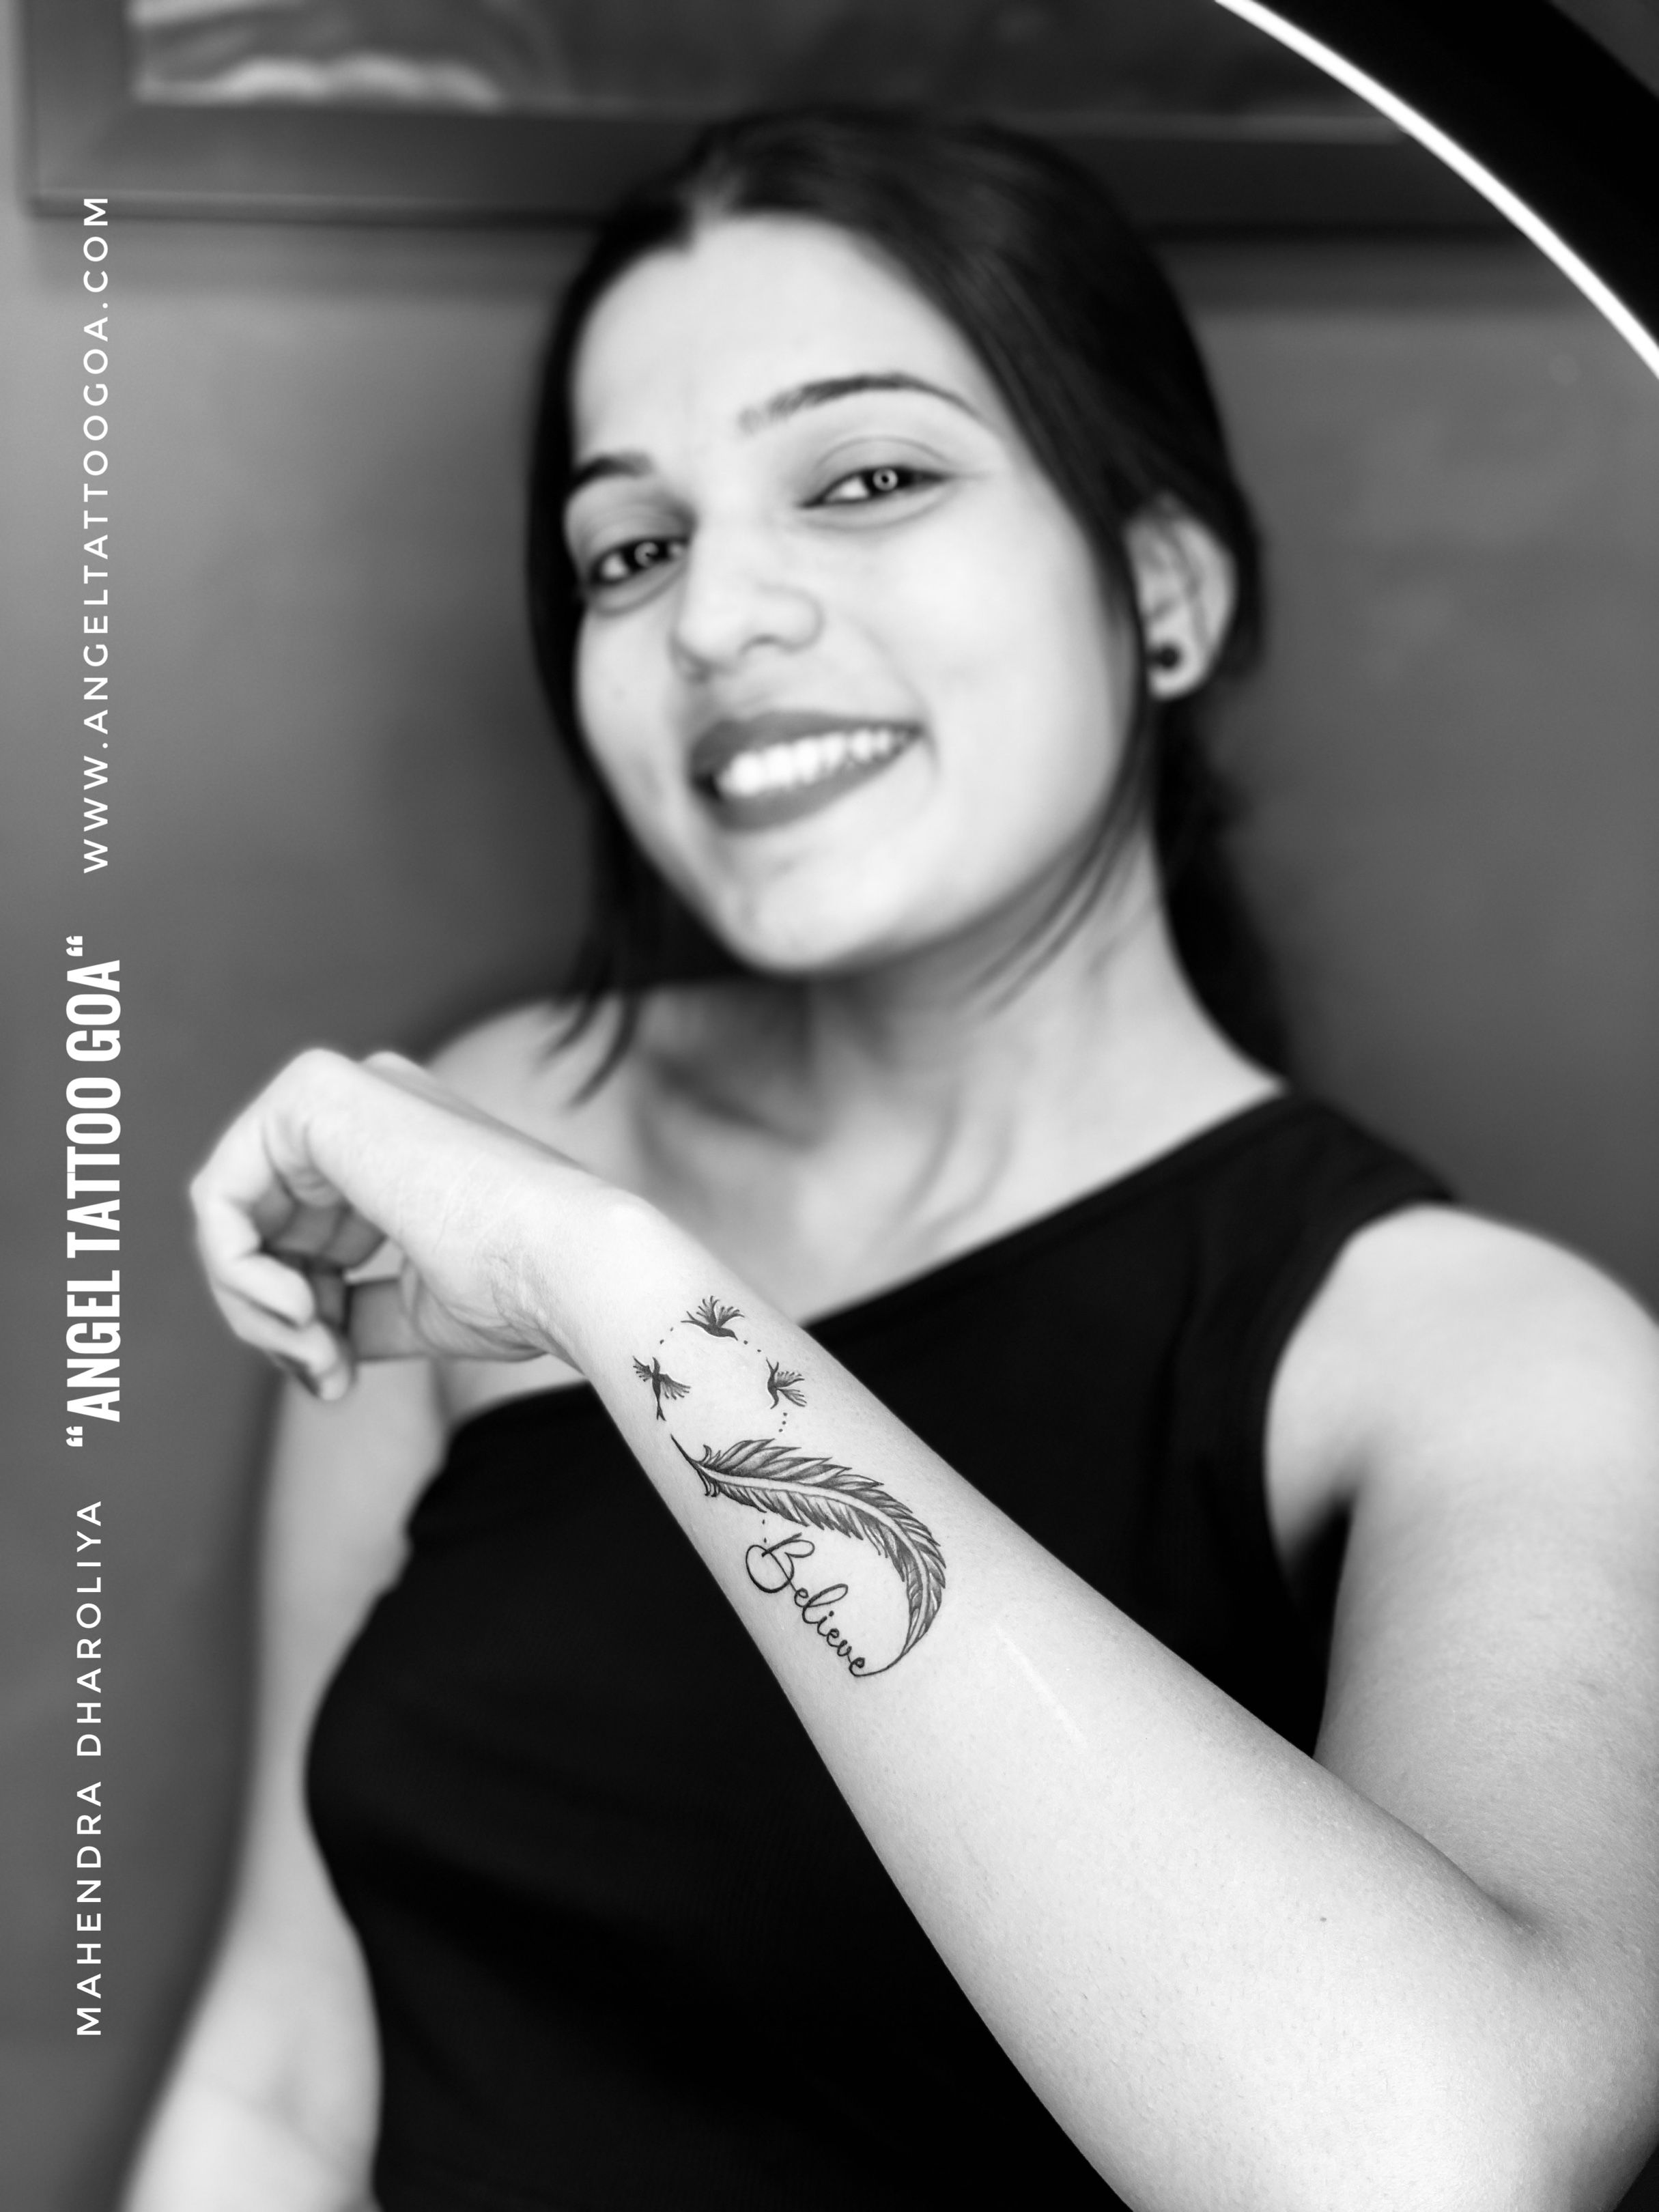 Moksha Tattoo Studio: The Best Tattoo Artist and Studio in Goa